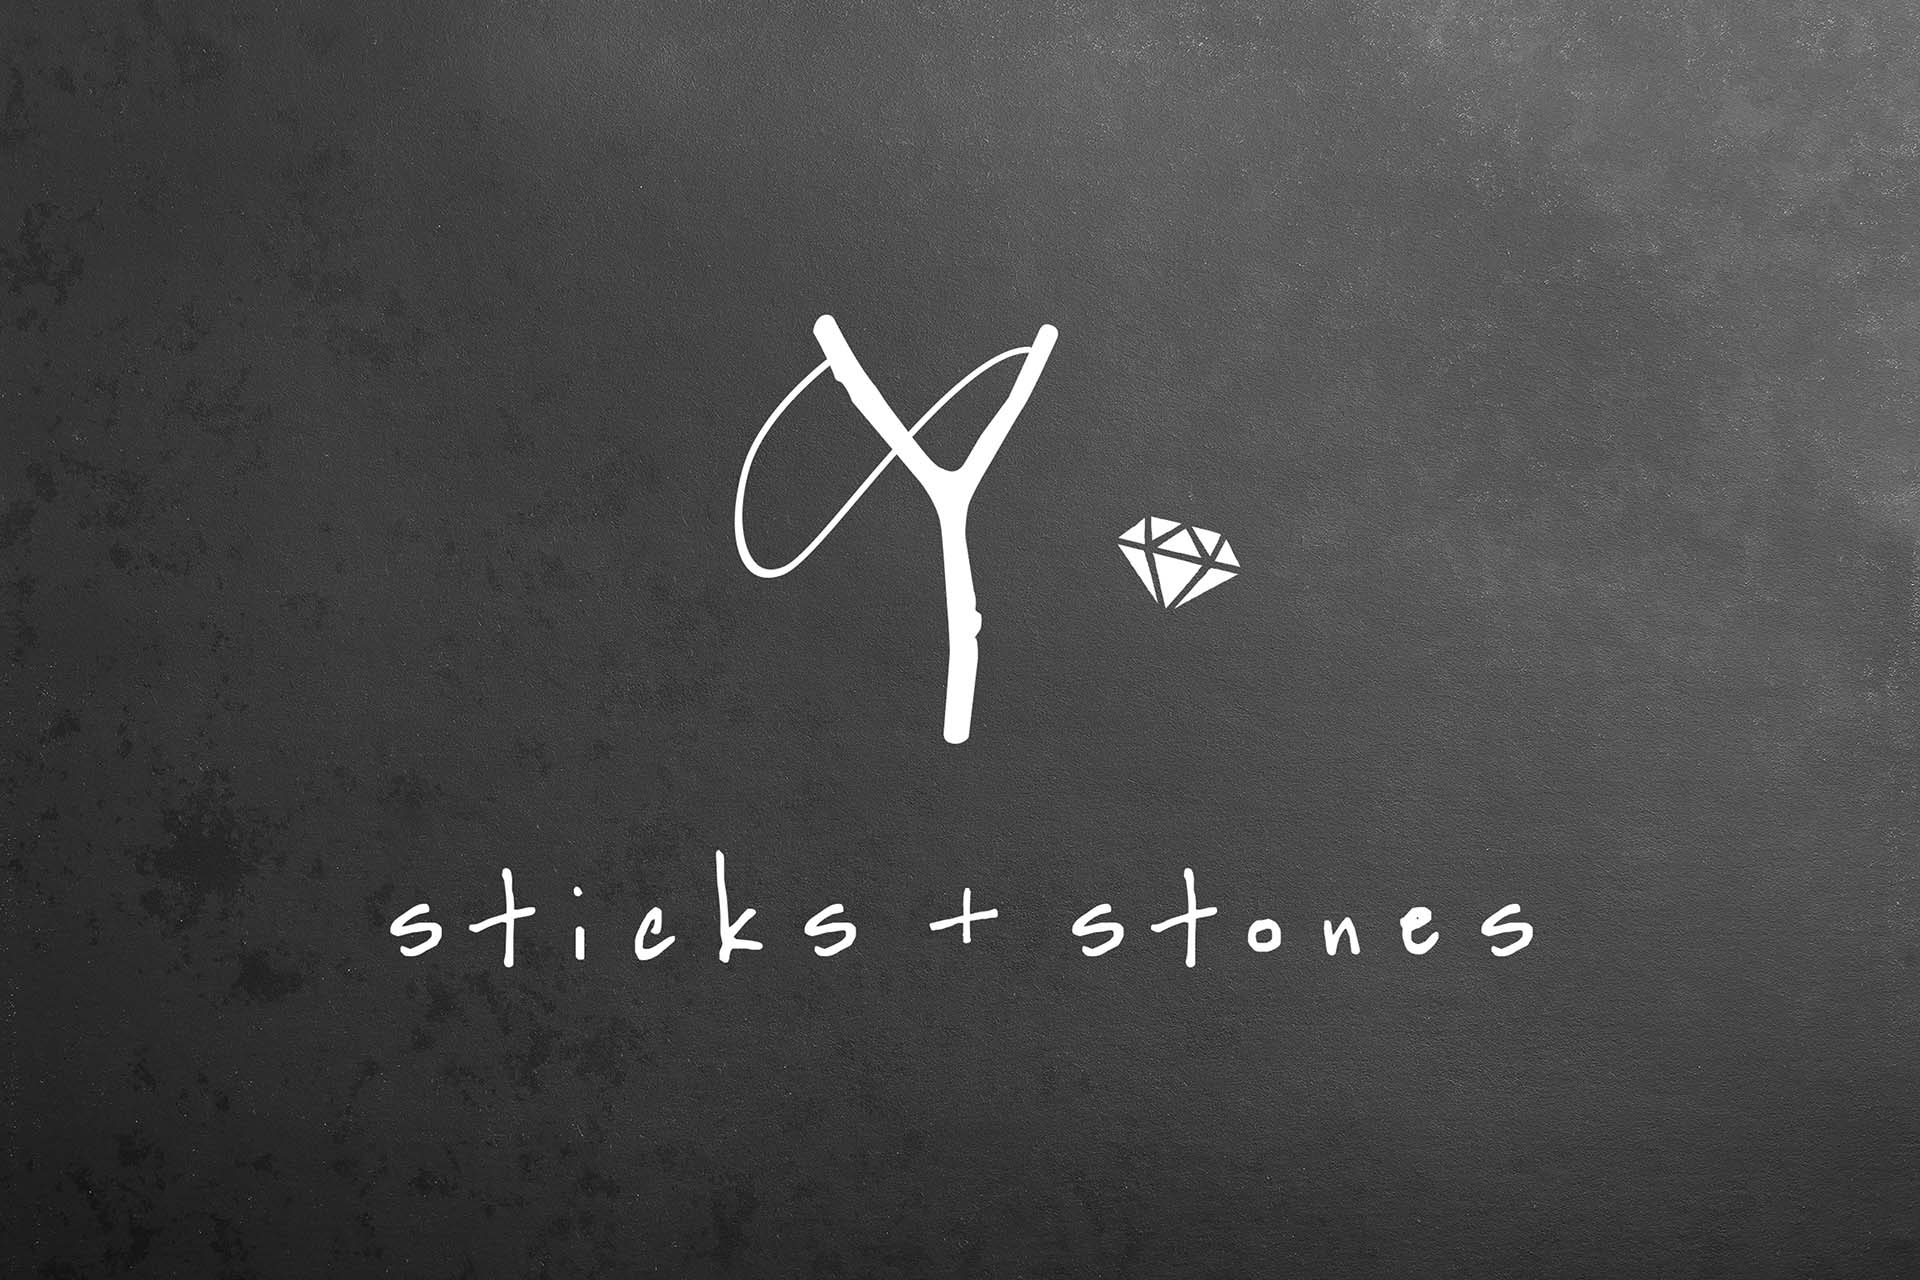 Sticks+Stones_1